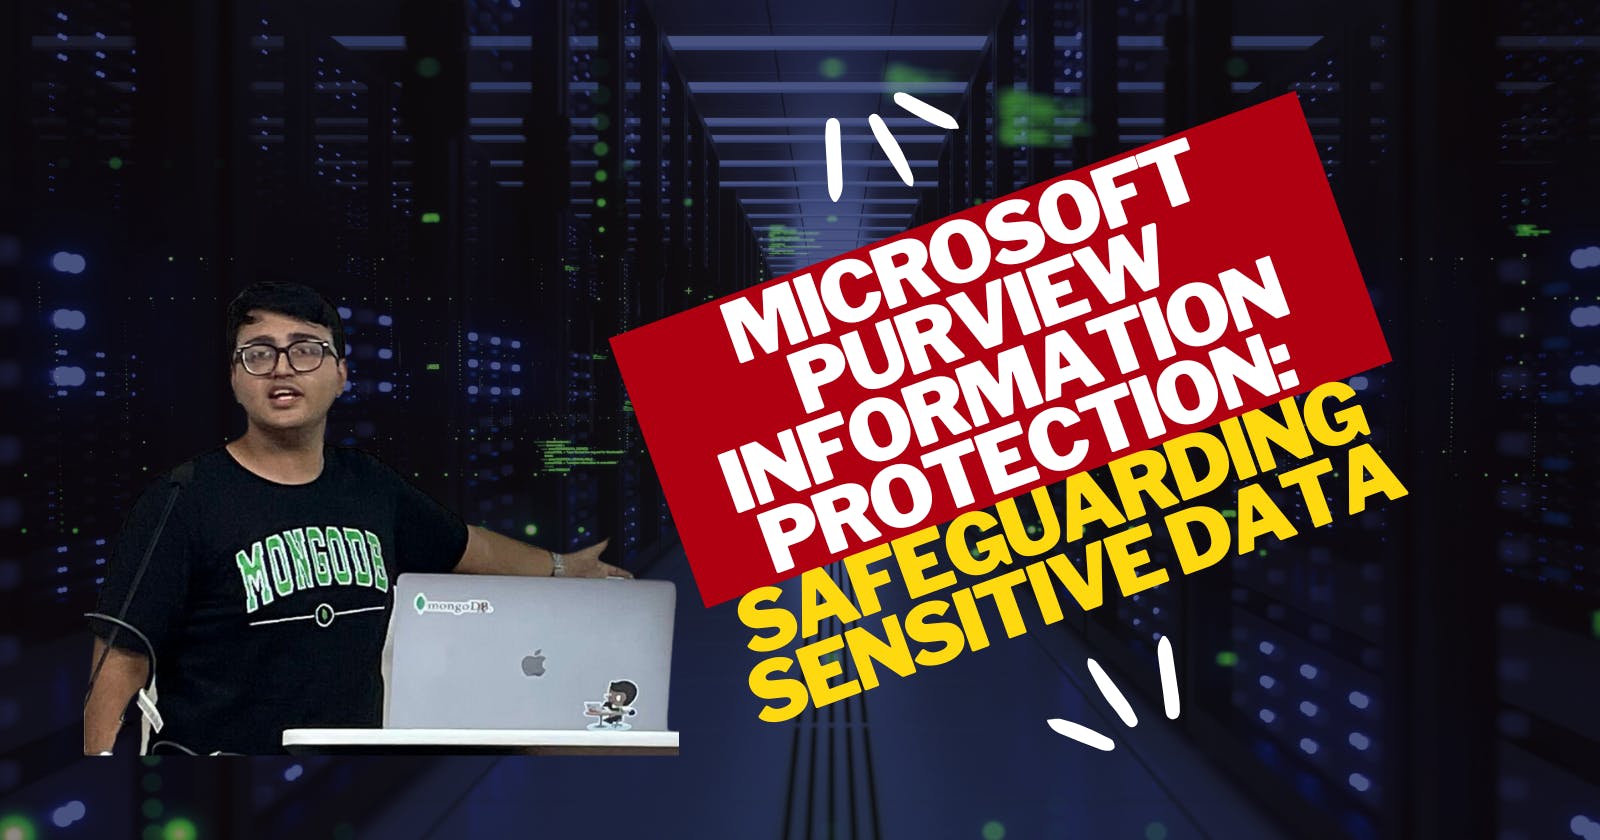 Microsoft Purview Information Protection: Safeguarding Sensitive Data